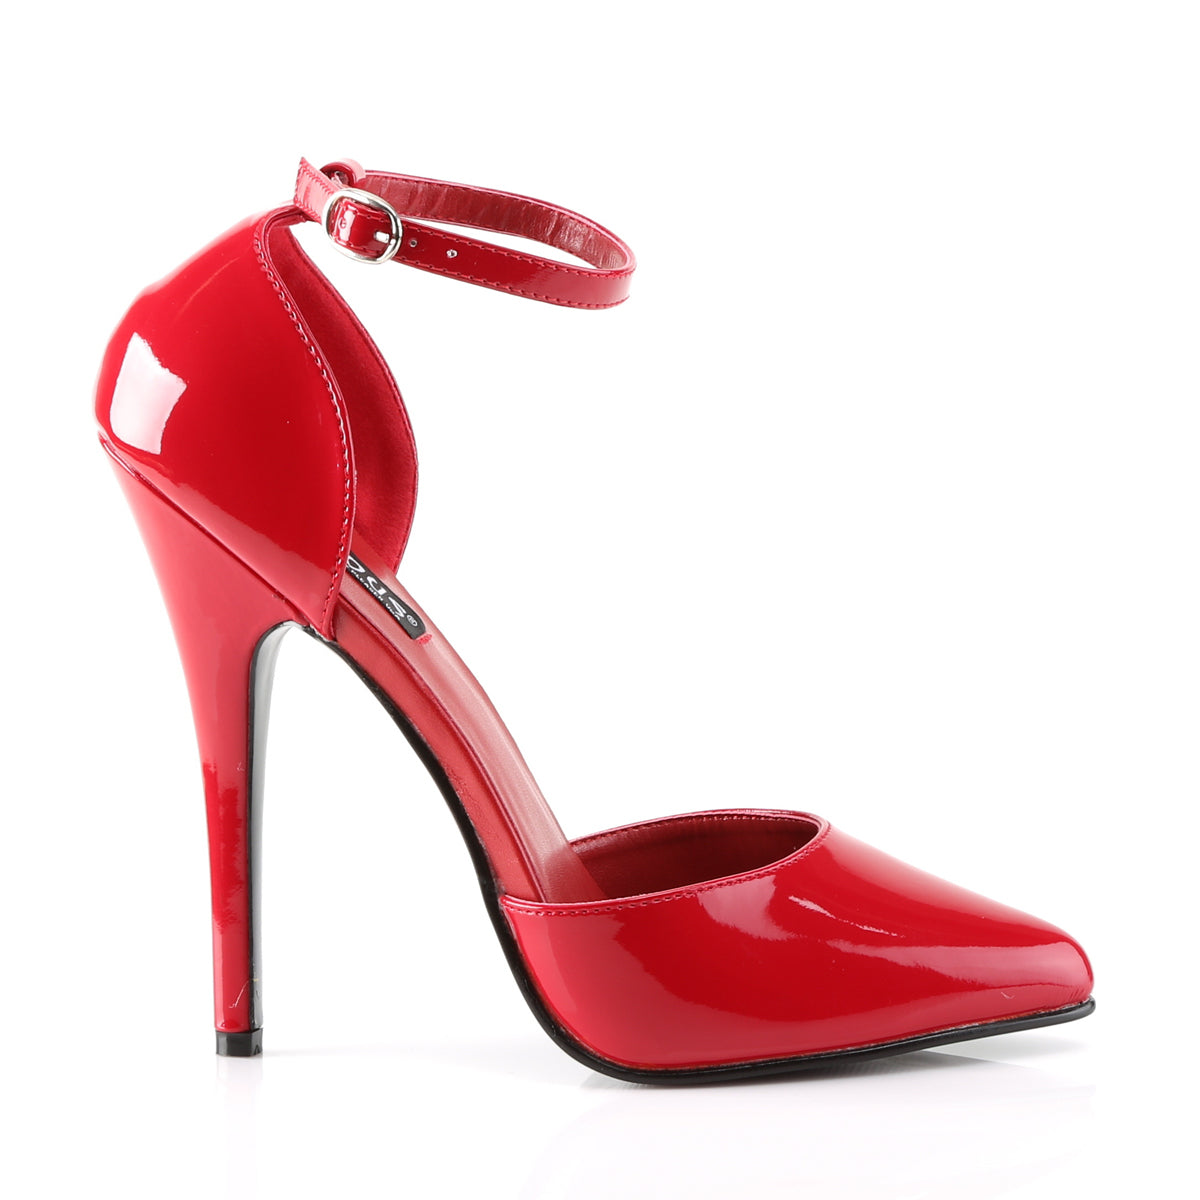 DOMINA-402 Devious Heels Red Patent Single Soles [Fetish Heels]